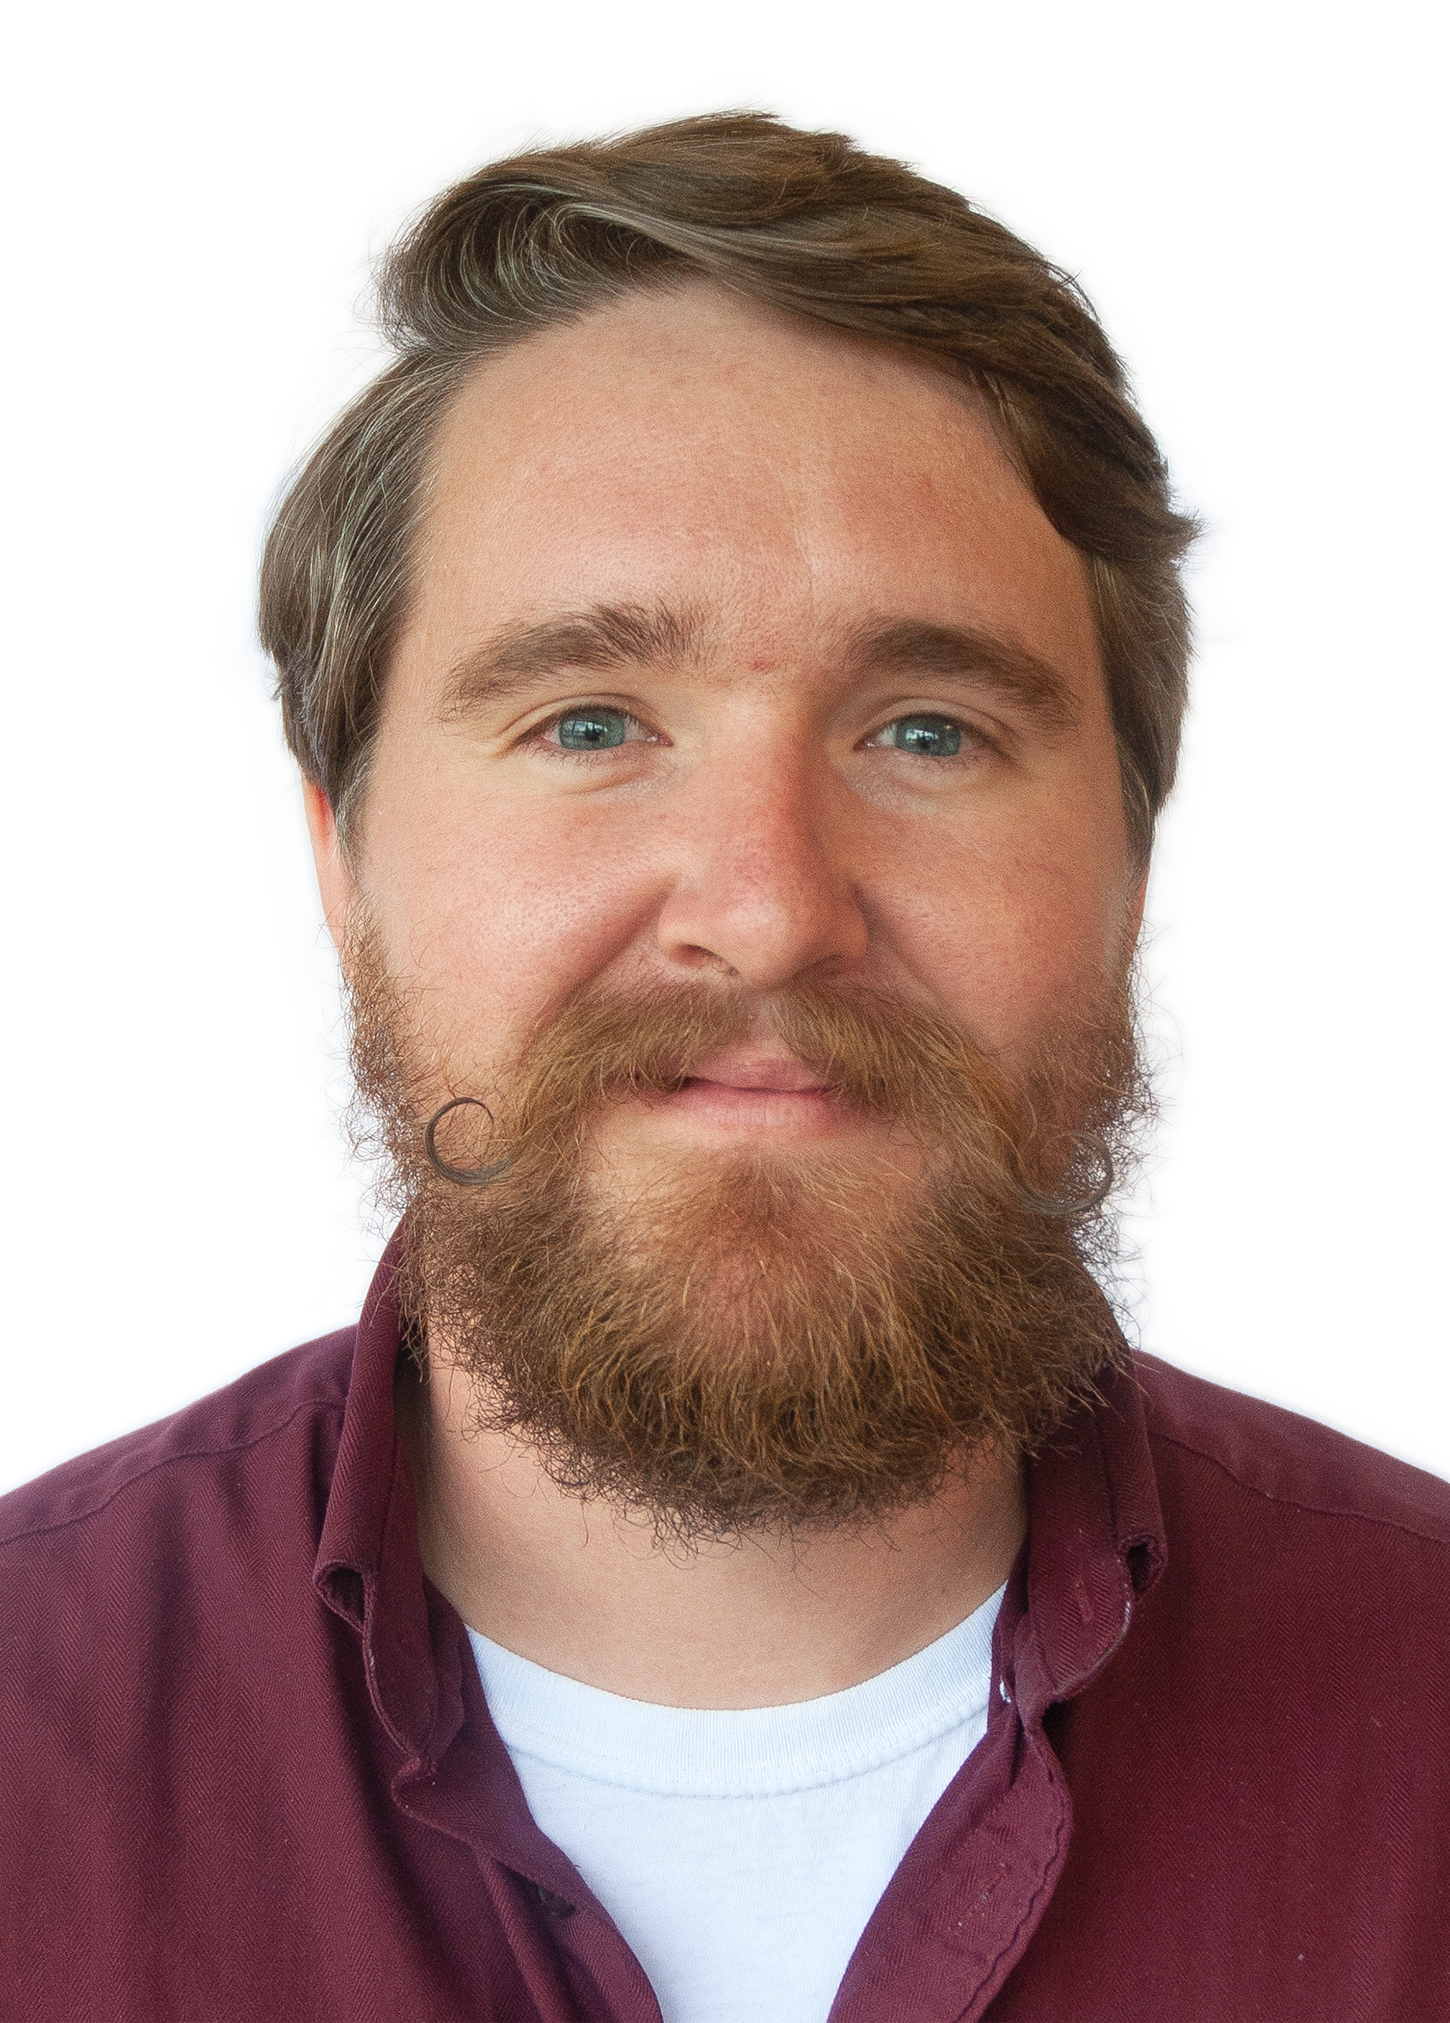 a headshot of a man with a reddish brown beard.